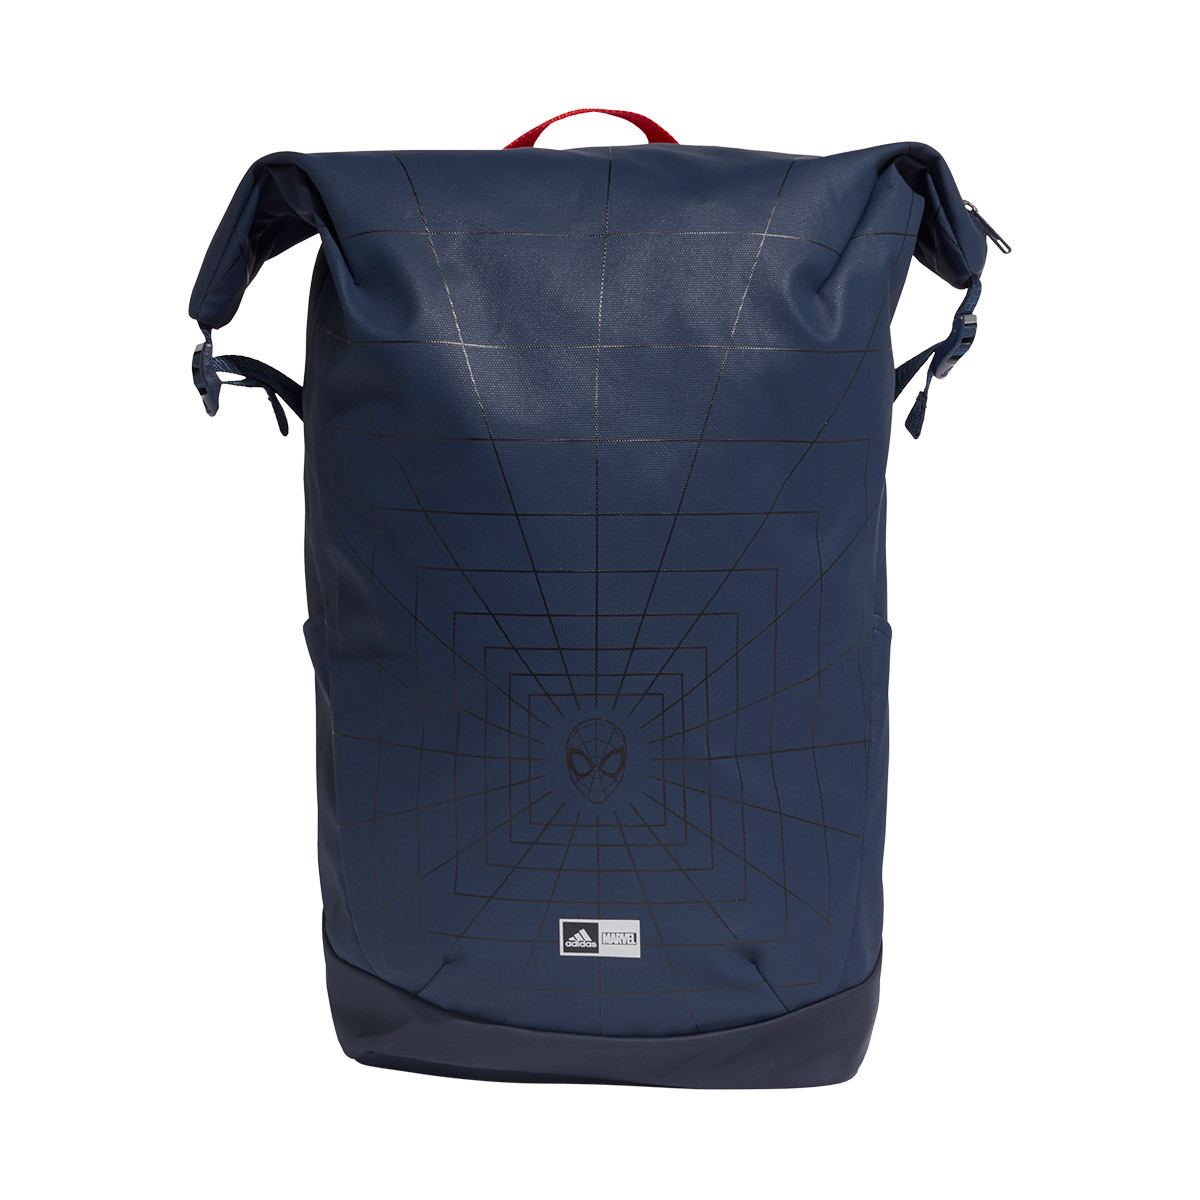 spiderman adidas backpack